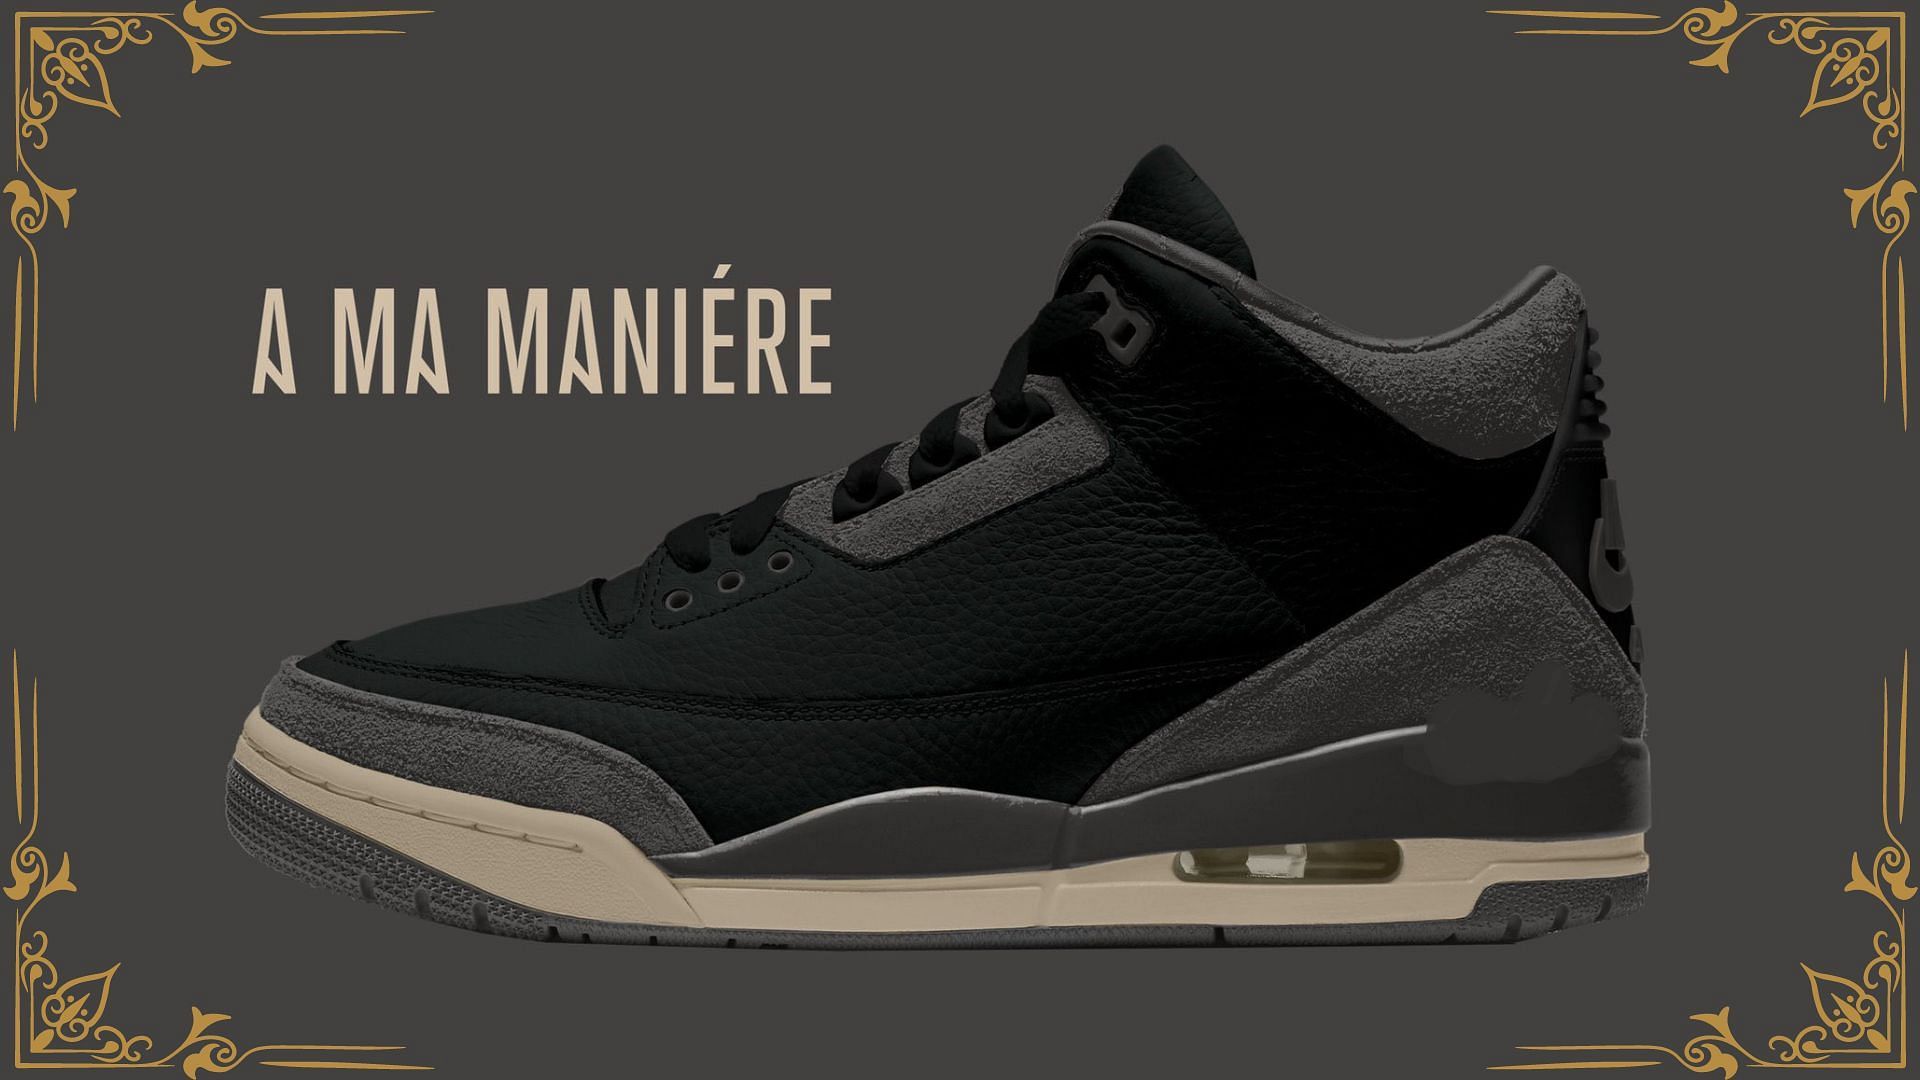 A Ma Maniere x Air Jordan 3 sneakers (Image via Instagram/@zsneakerheadz)